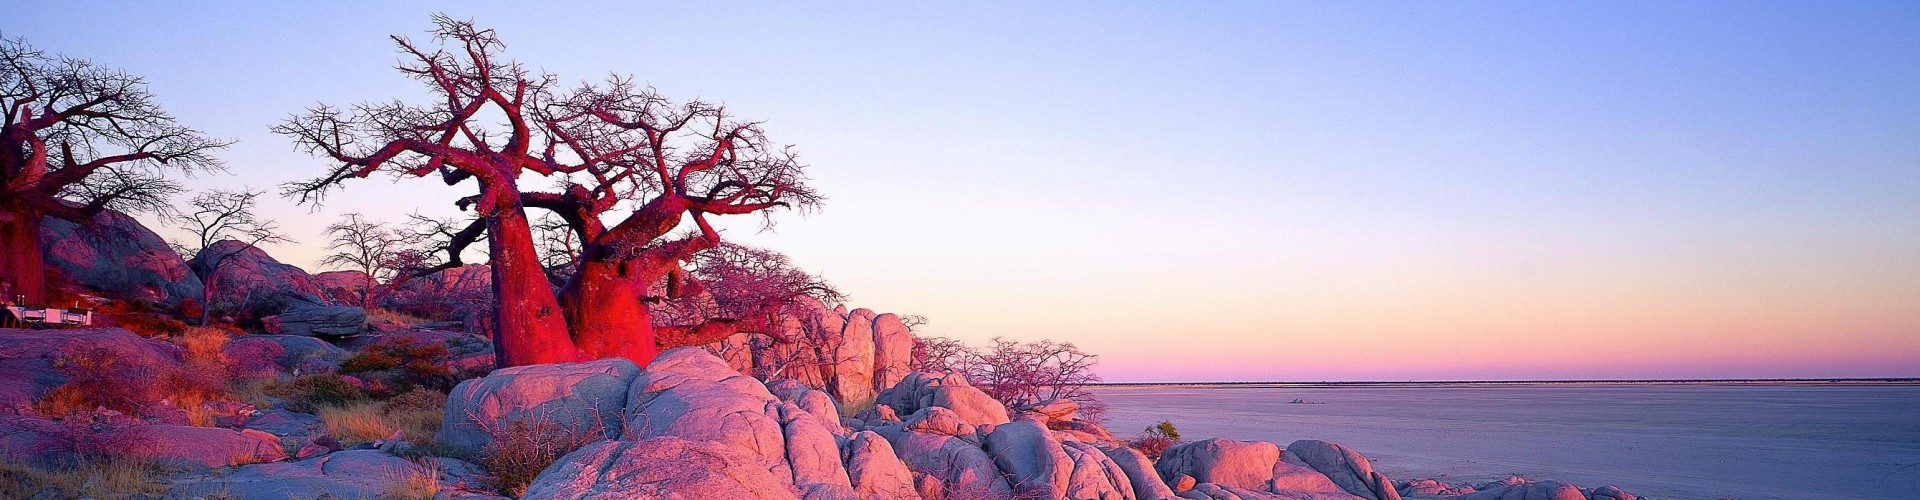 Stunted pink baobab, Botswana